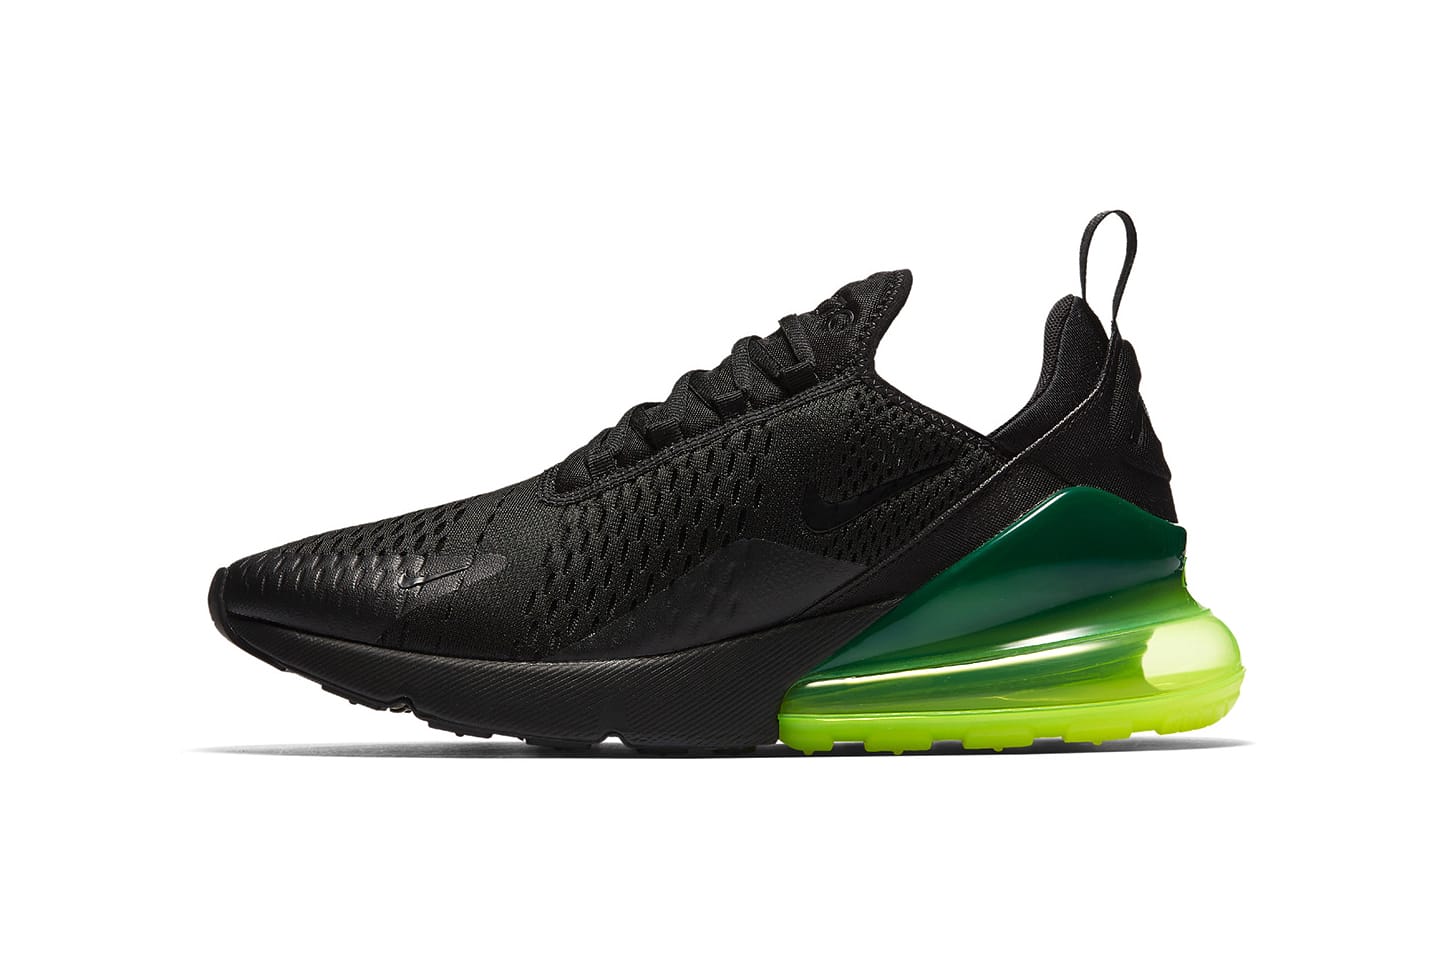 Nike Air Max 270 in Black/Neon Green 